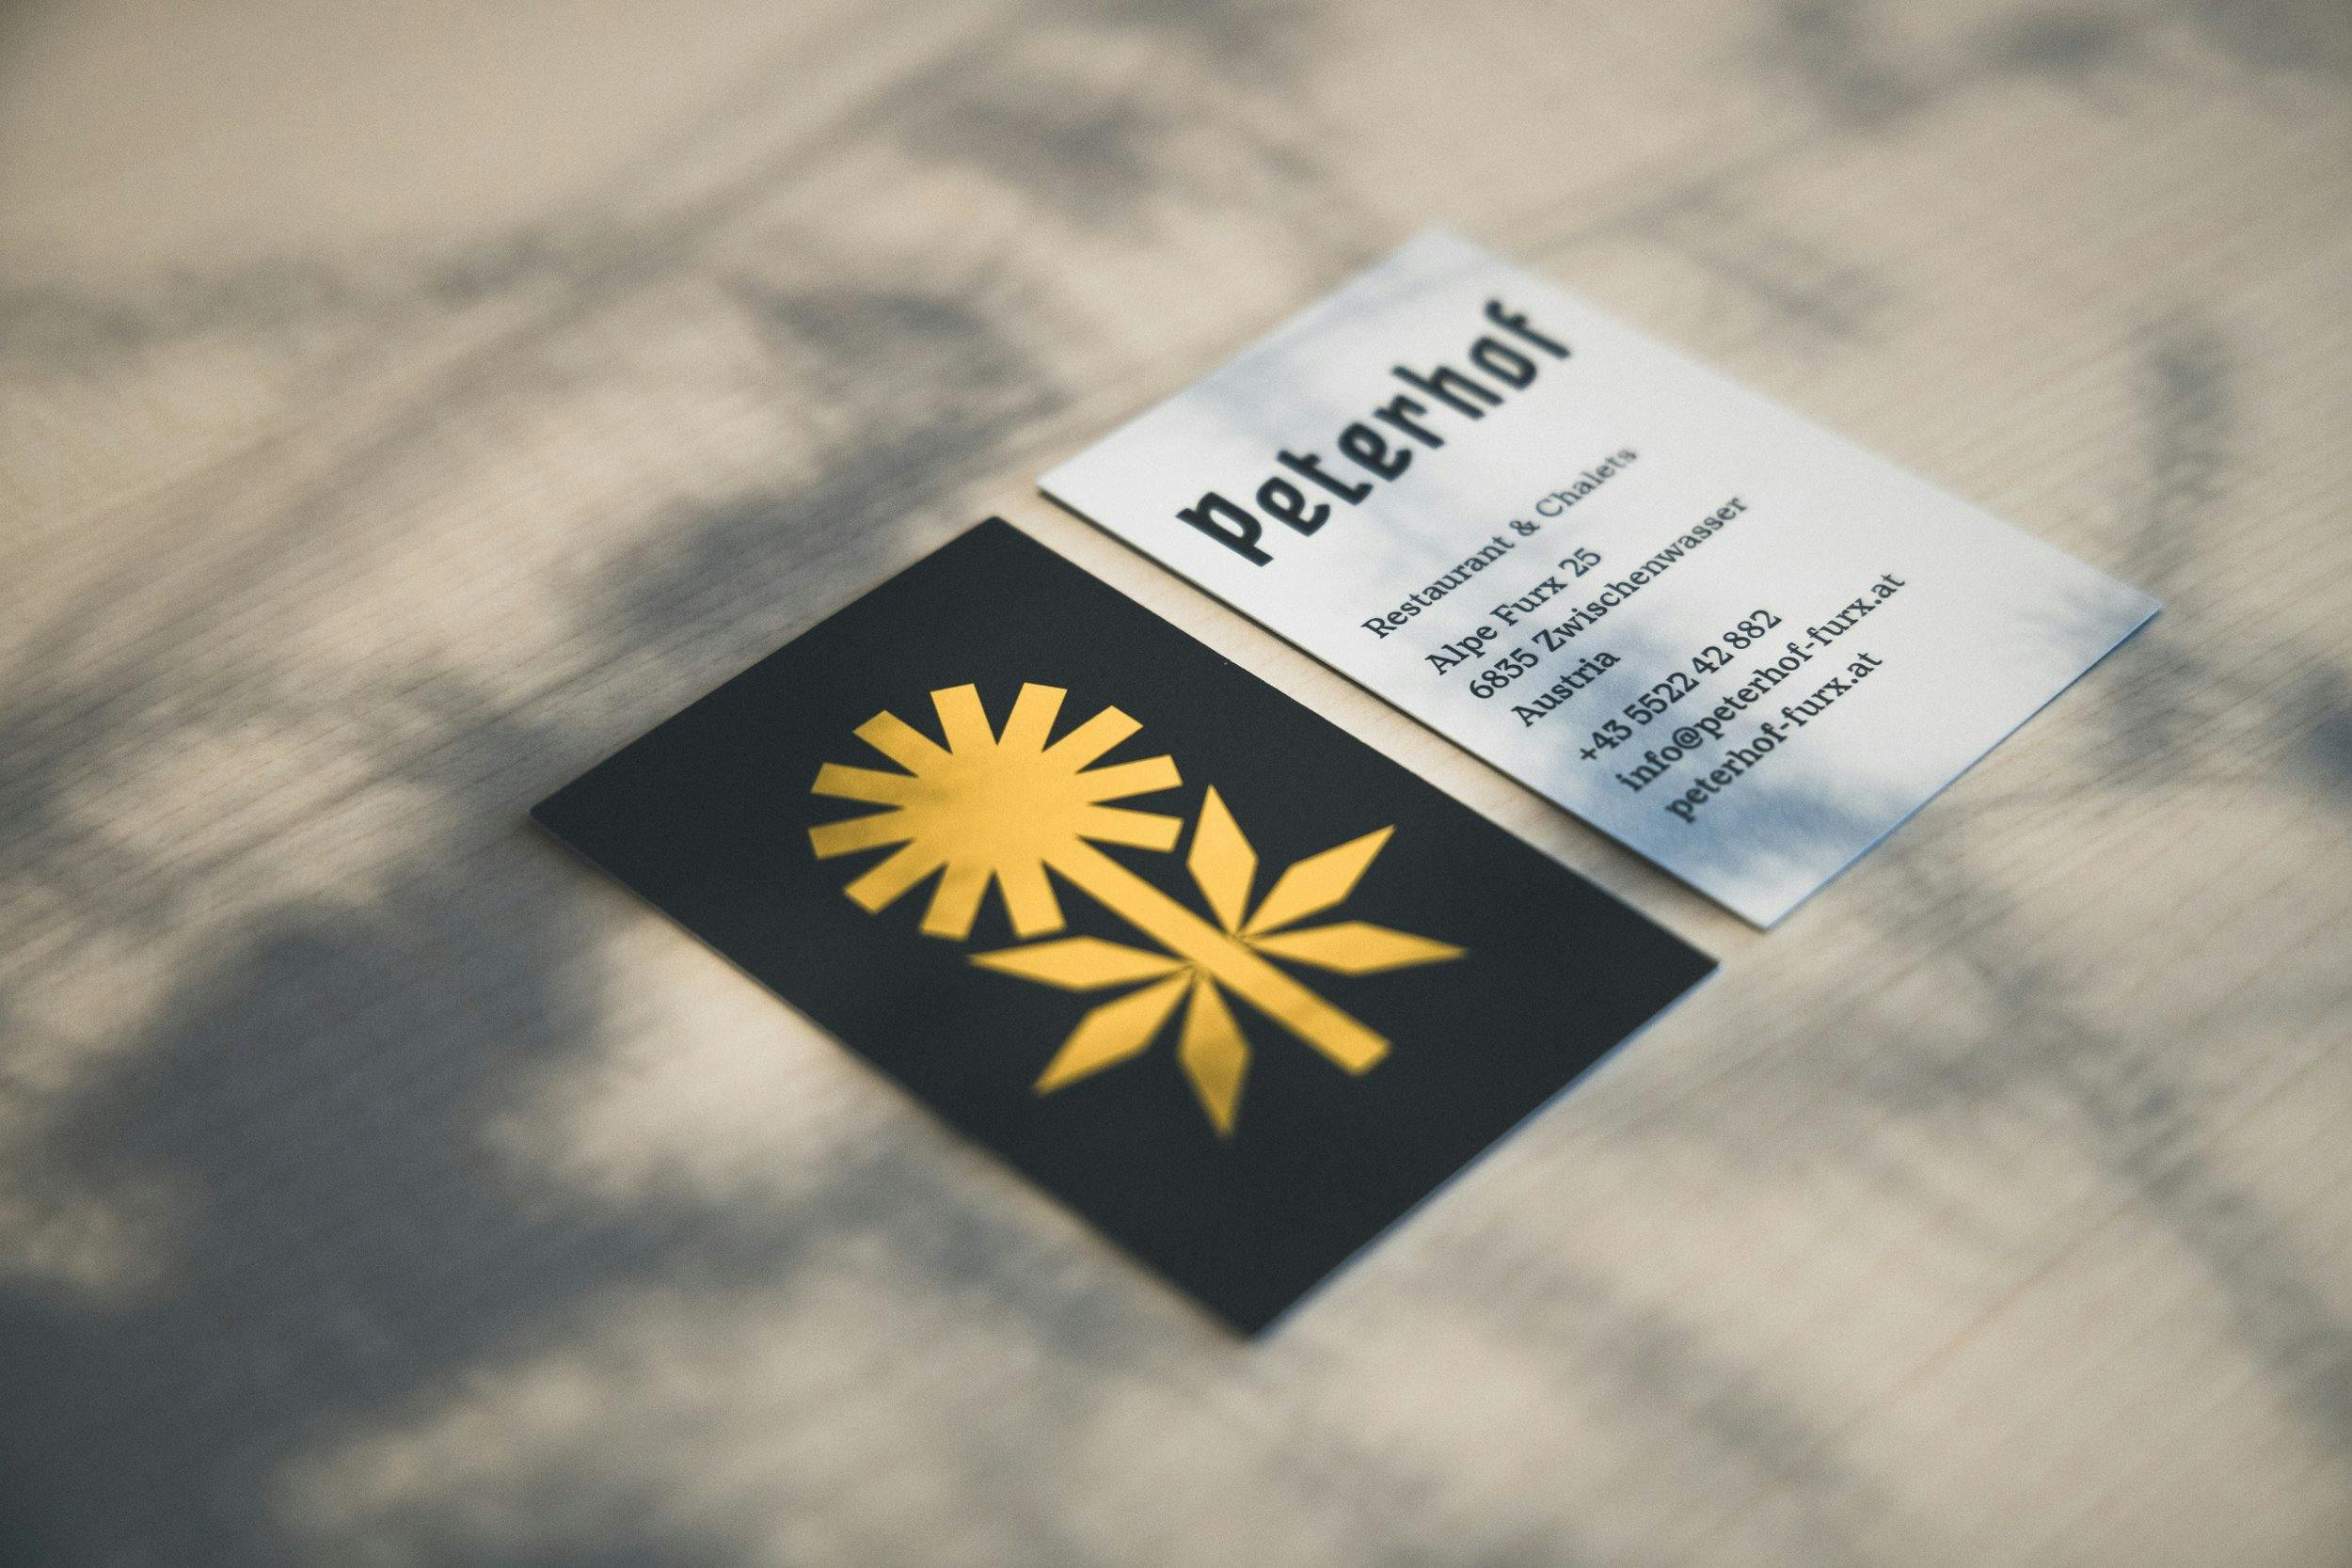 Peterhof Branding: Drucksachen – Visitenkarten © Patricia Keckeis